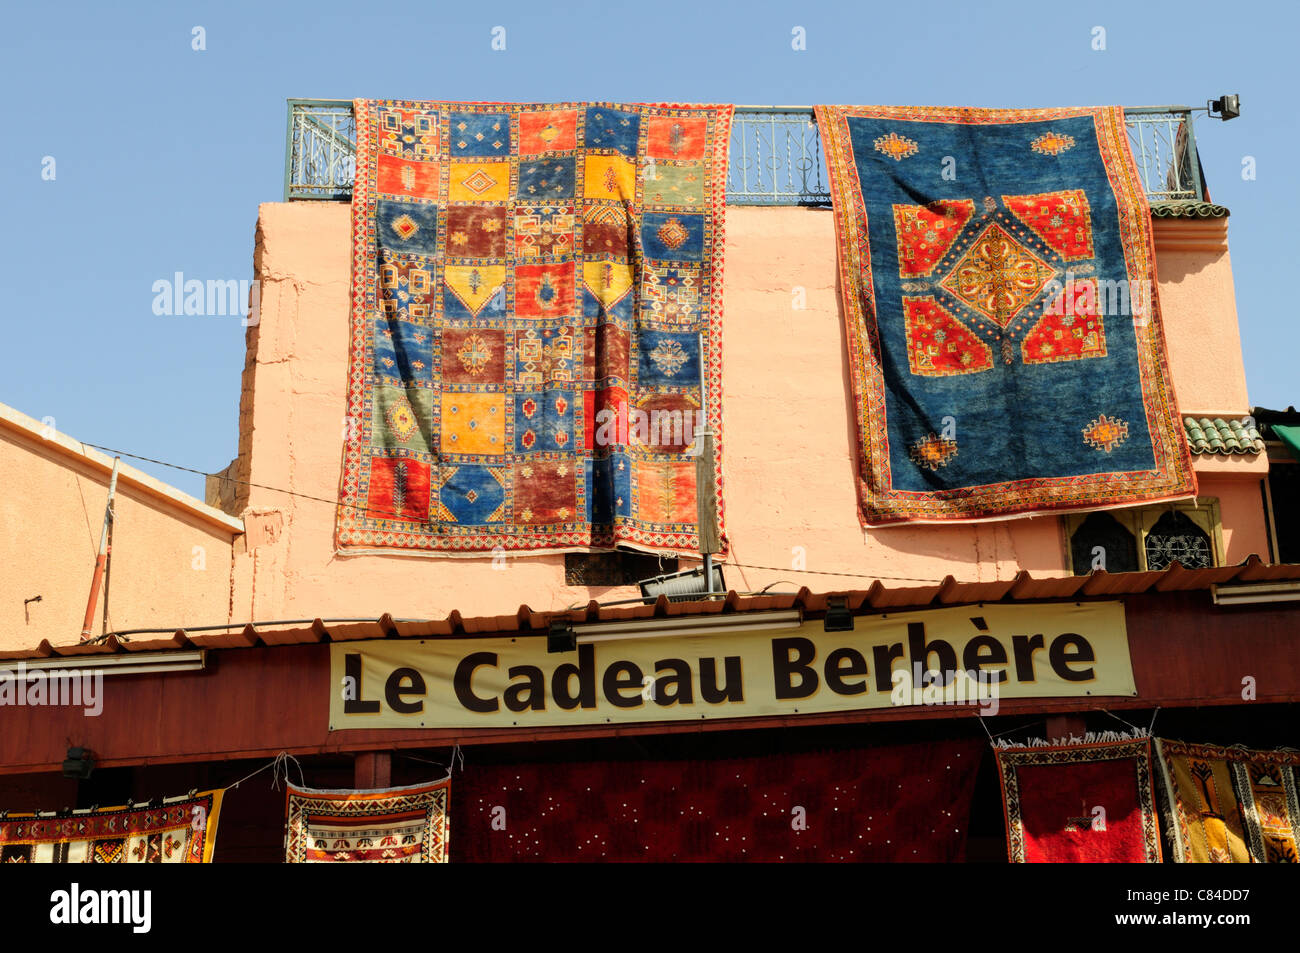 Le Cadeau Berbere Carpet Shop, Place Djemaa el Fna, Marrakech, Morocco Stock Photo